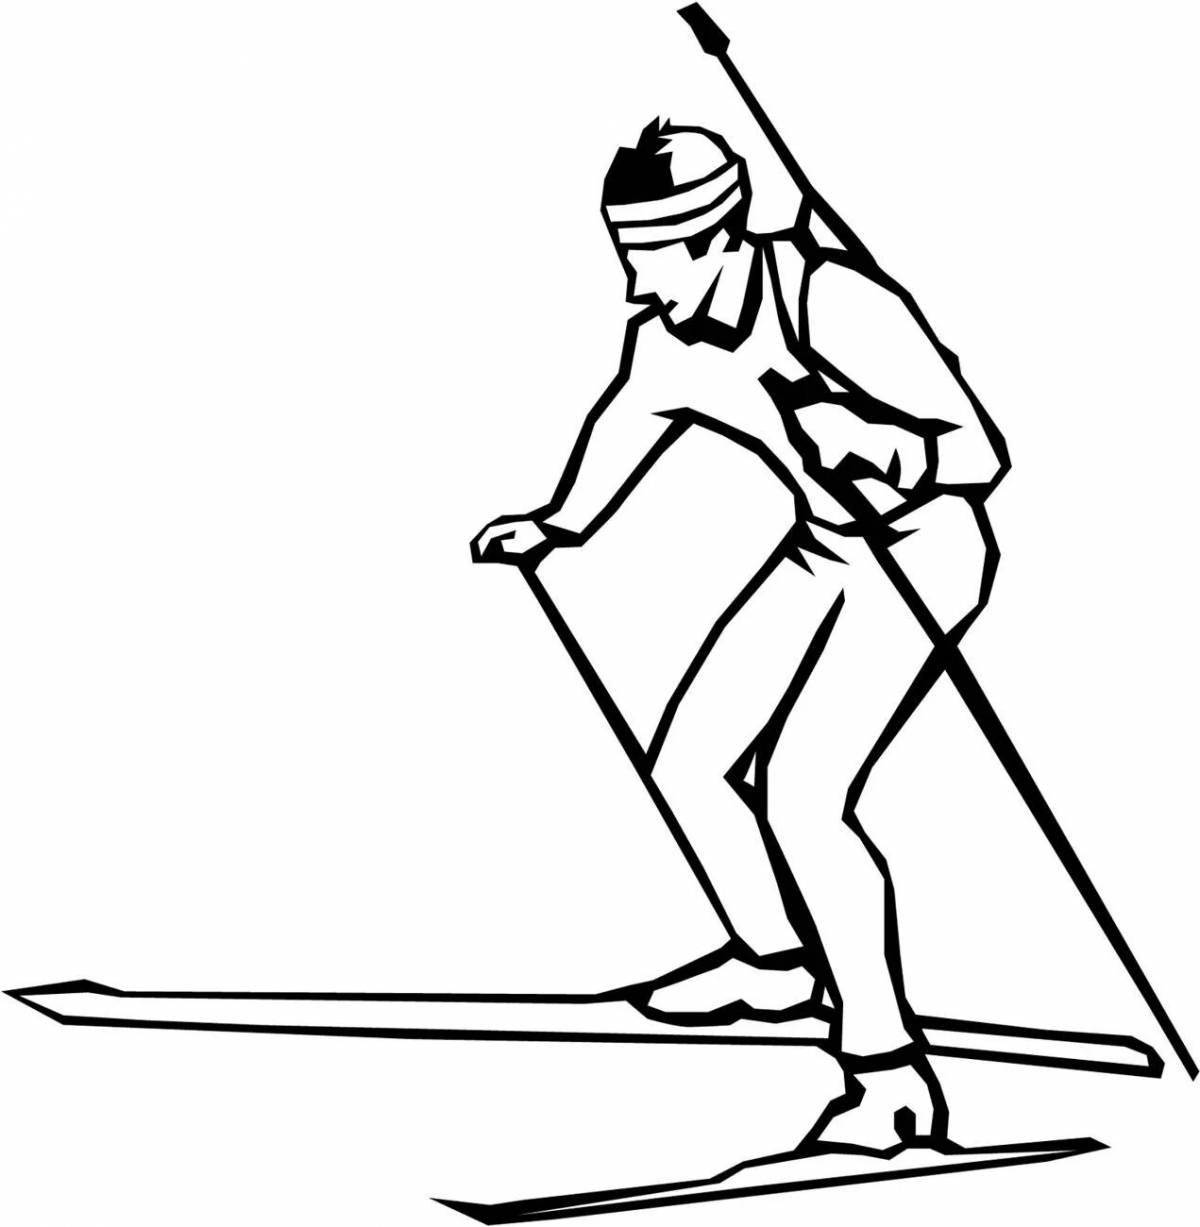 Skier in motion #3